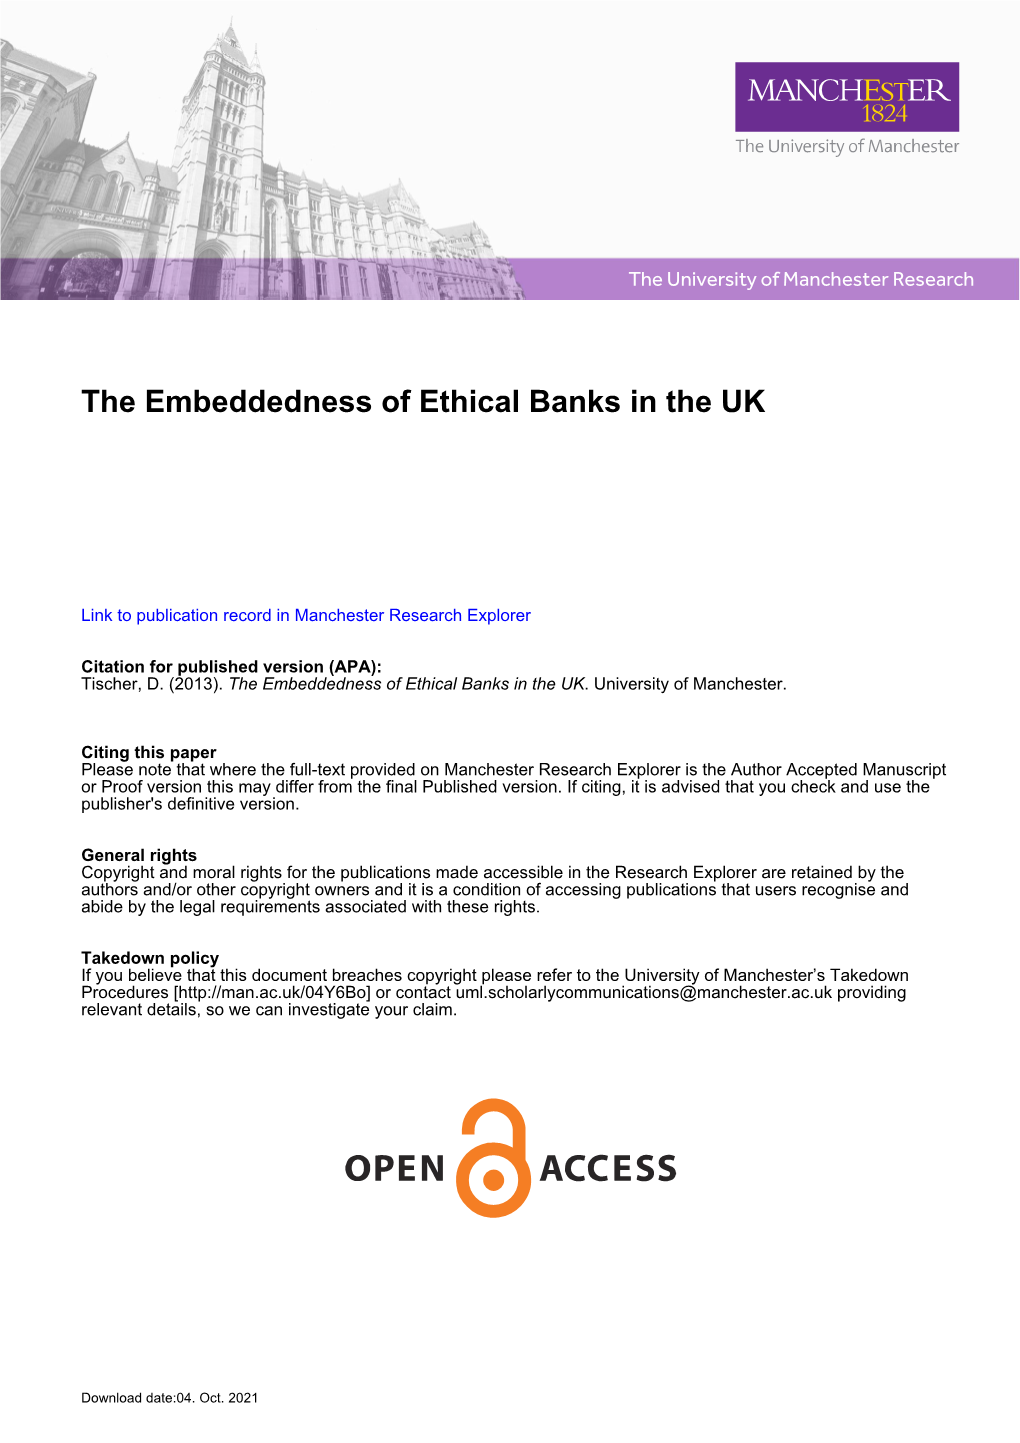 Daniel Tischer (2013) the Embeddedness of Ethical Banking